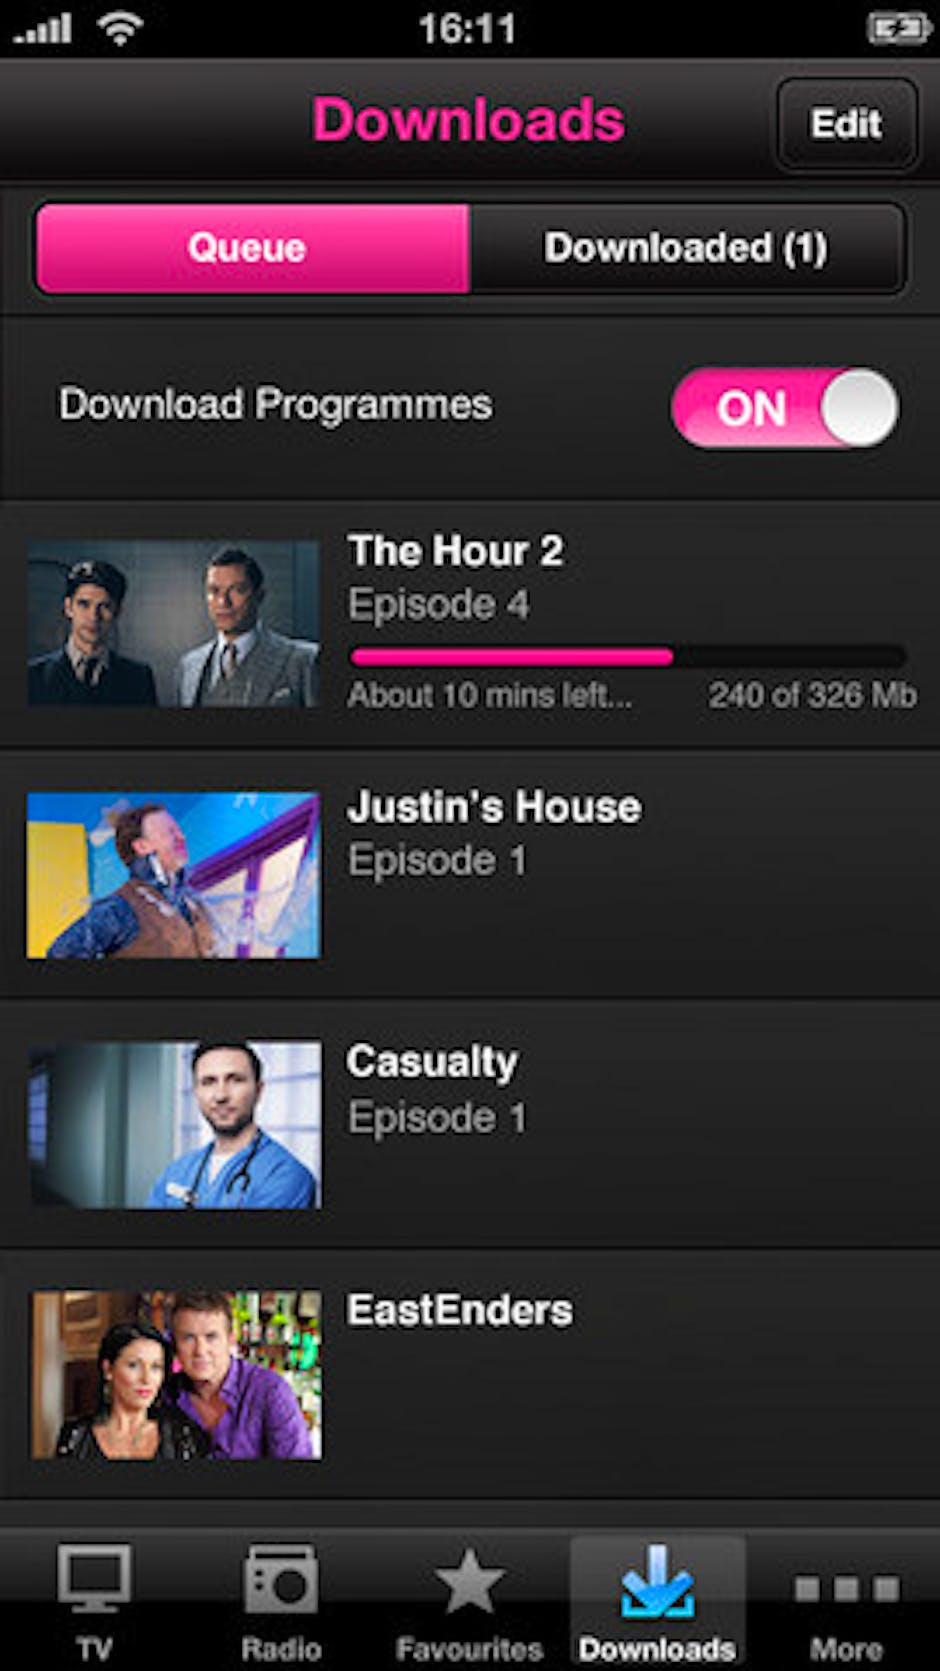 bbc iplayer for tv